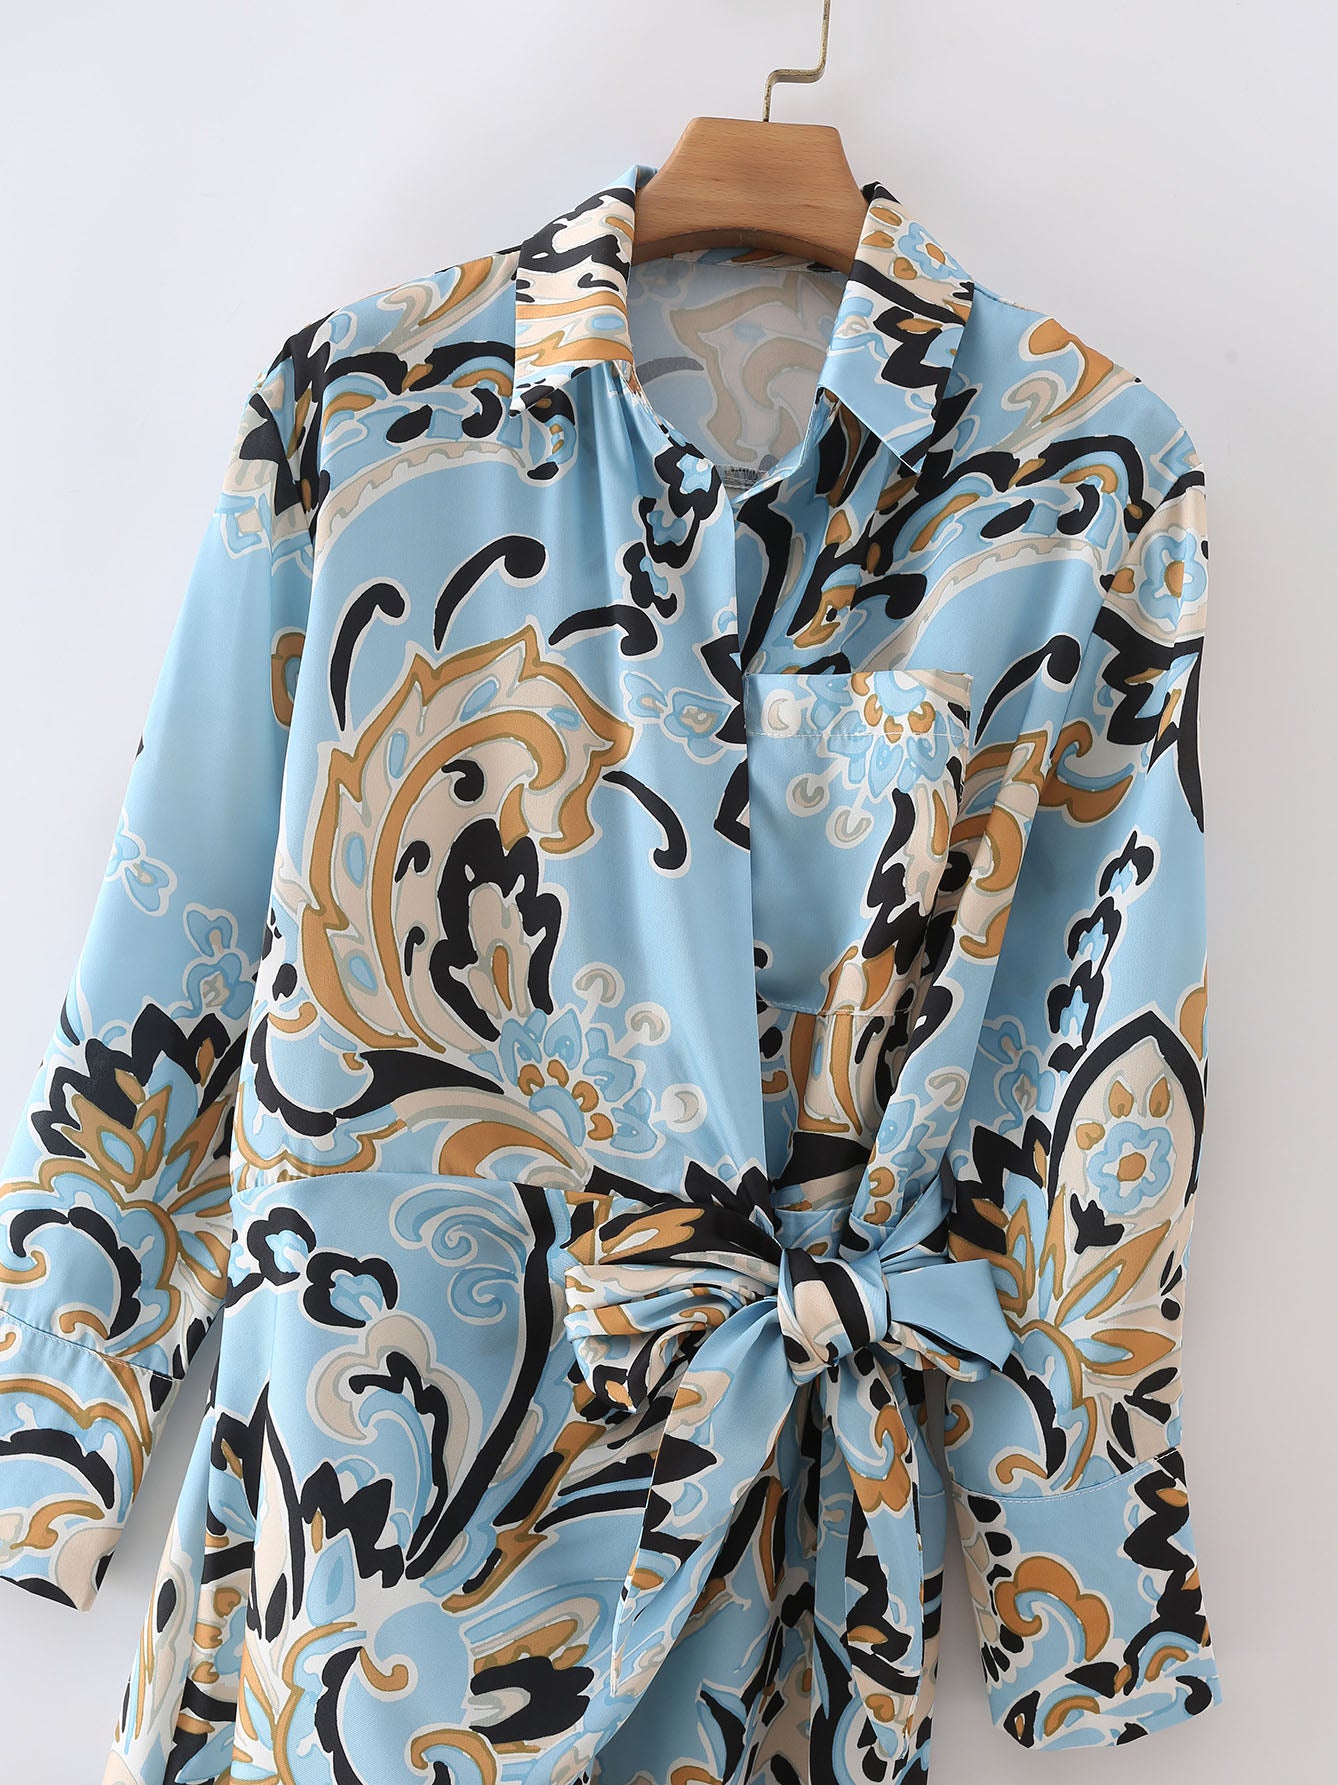 CM-D082352 Women Casual Seoul Style Printed Pocket Tie Wrap Shirt Maxi Dress - Blue